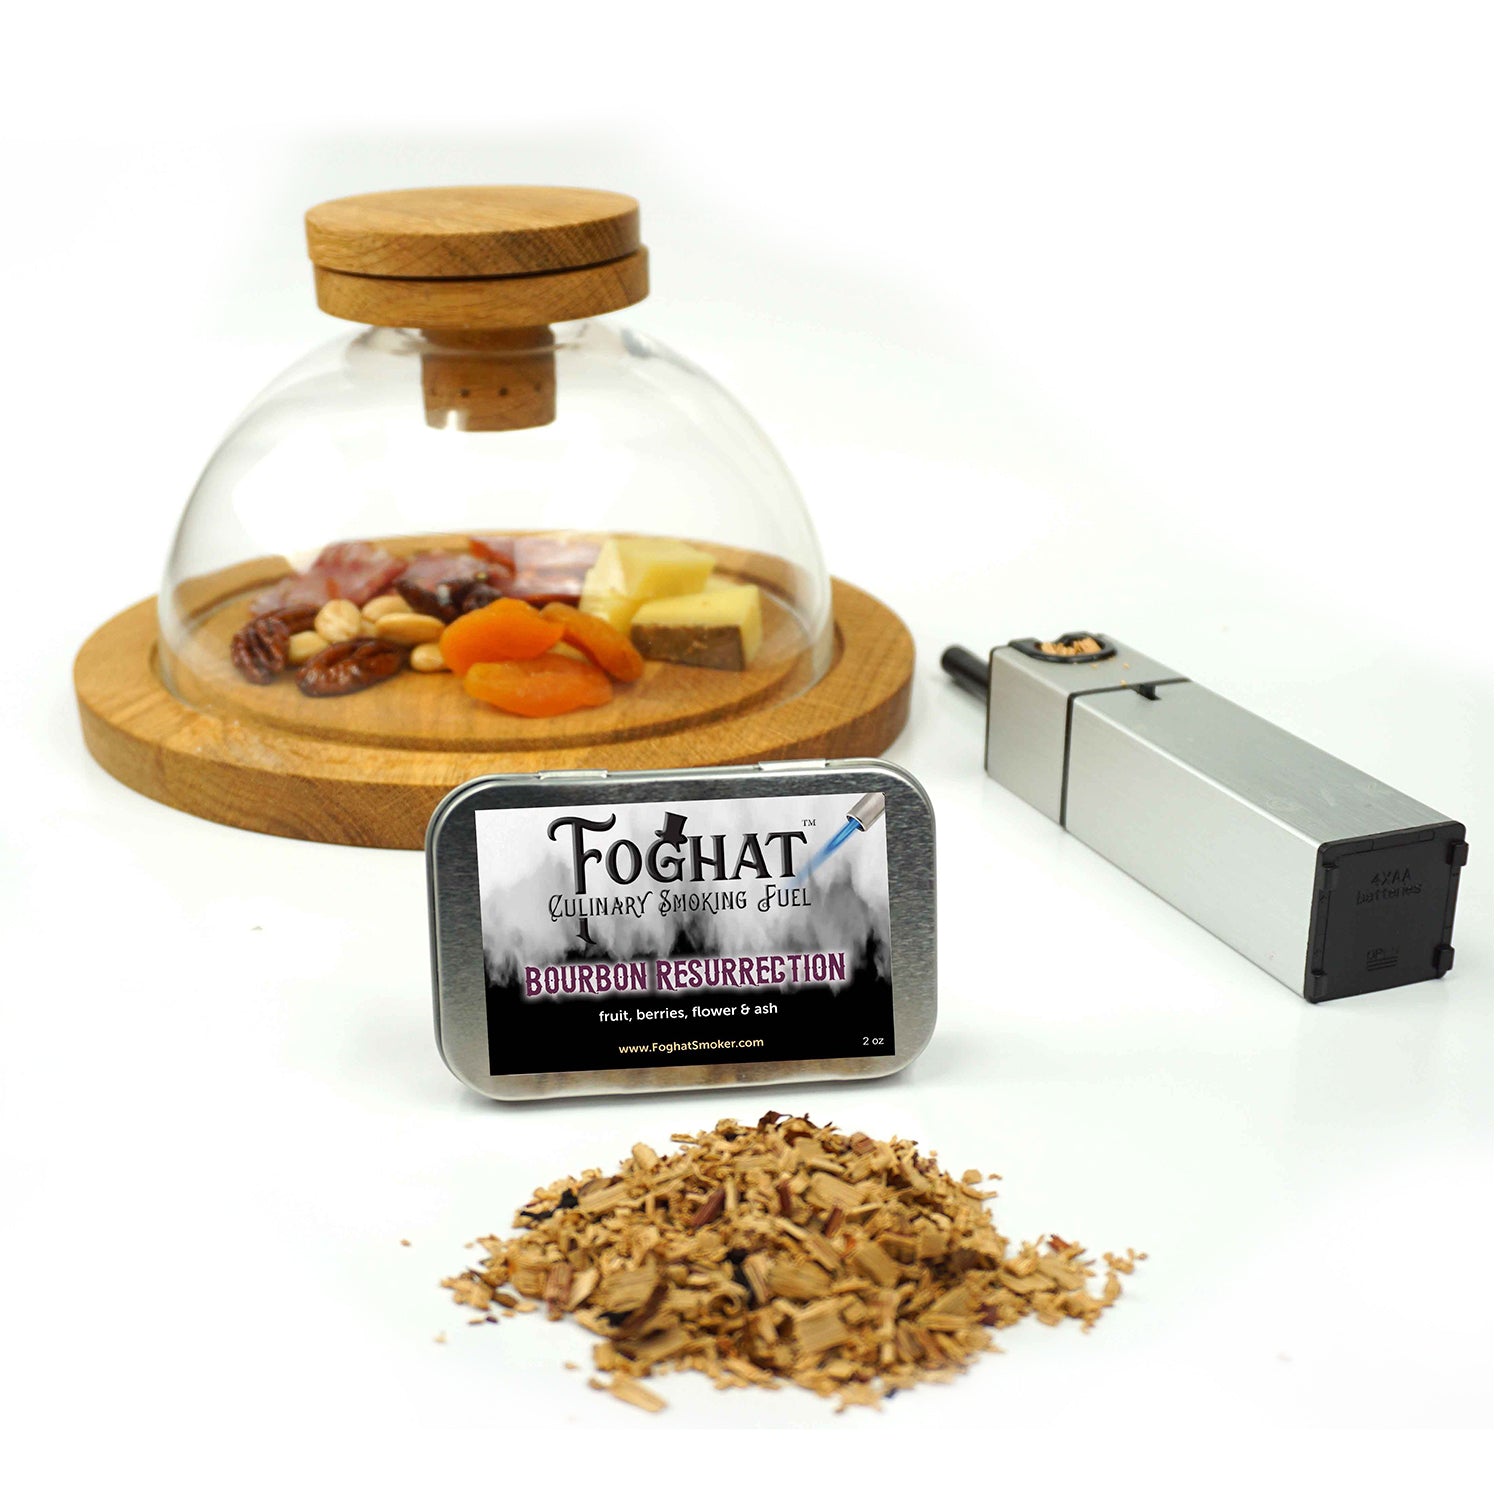 Foghat Culinary Smoking Fuel Bourbon Resurrection Fruity & Spicy Medium Profile